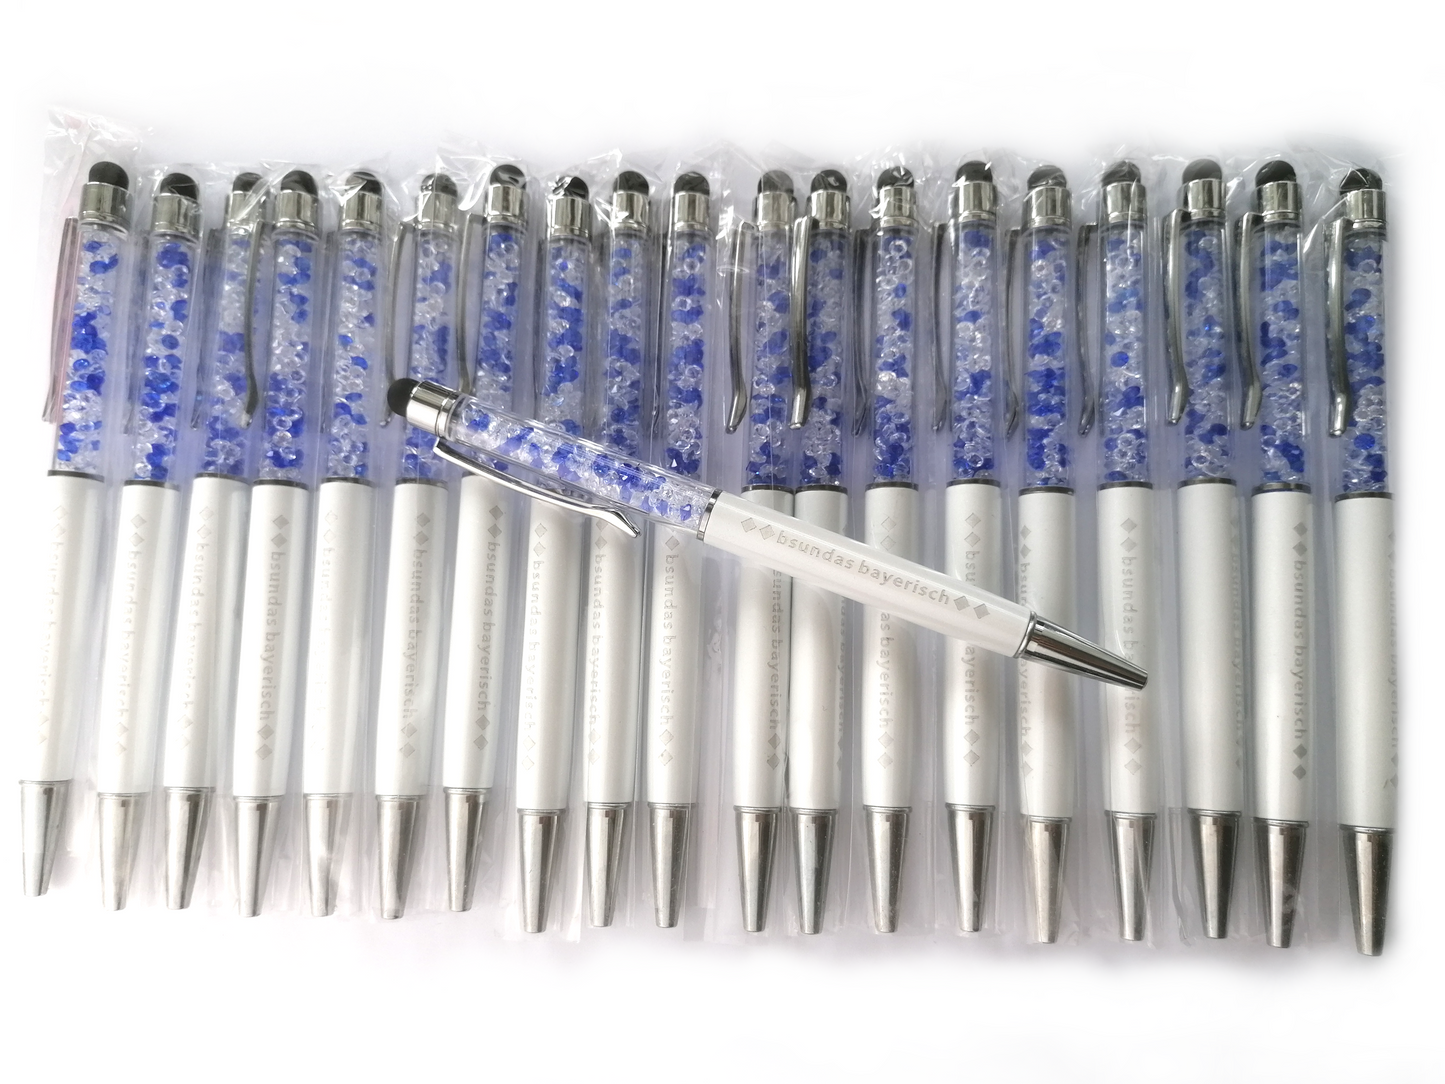 Set bayerischer Kugelschreiber Kristall Optik - 20 Stück blau weiß - bsundas bayerisch